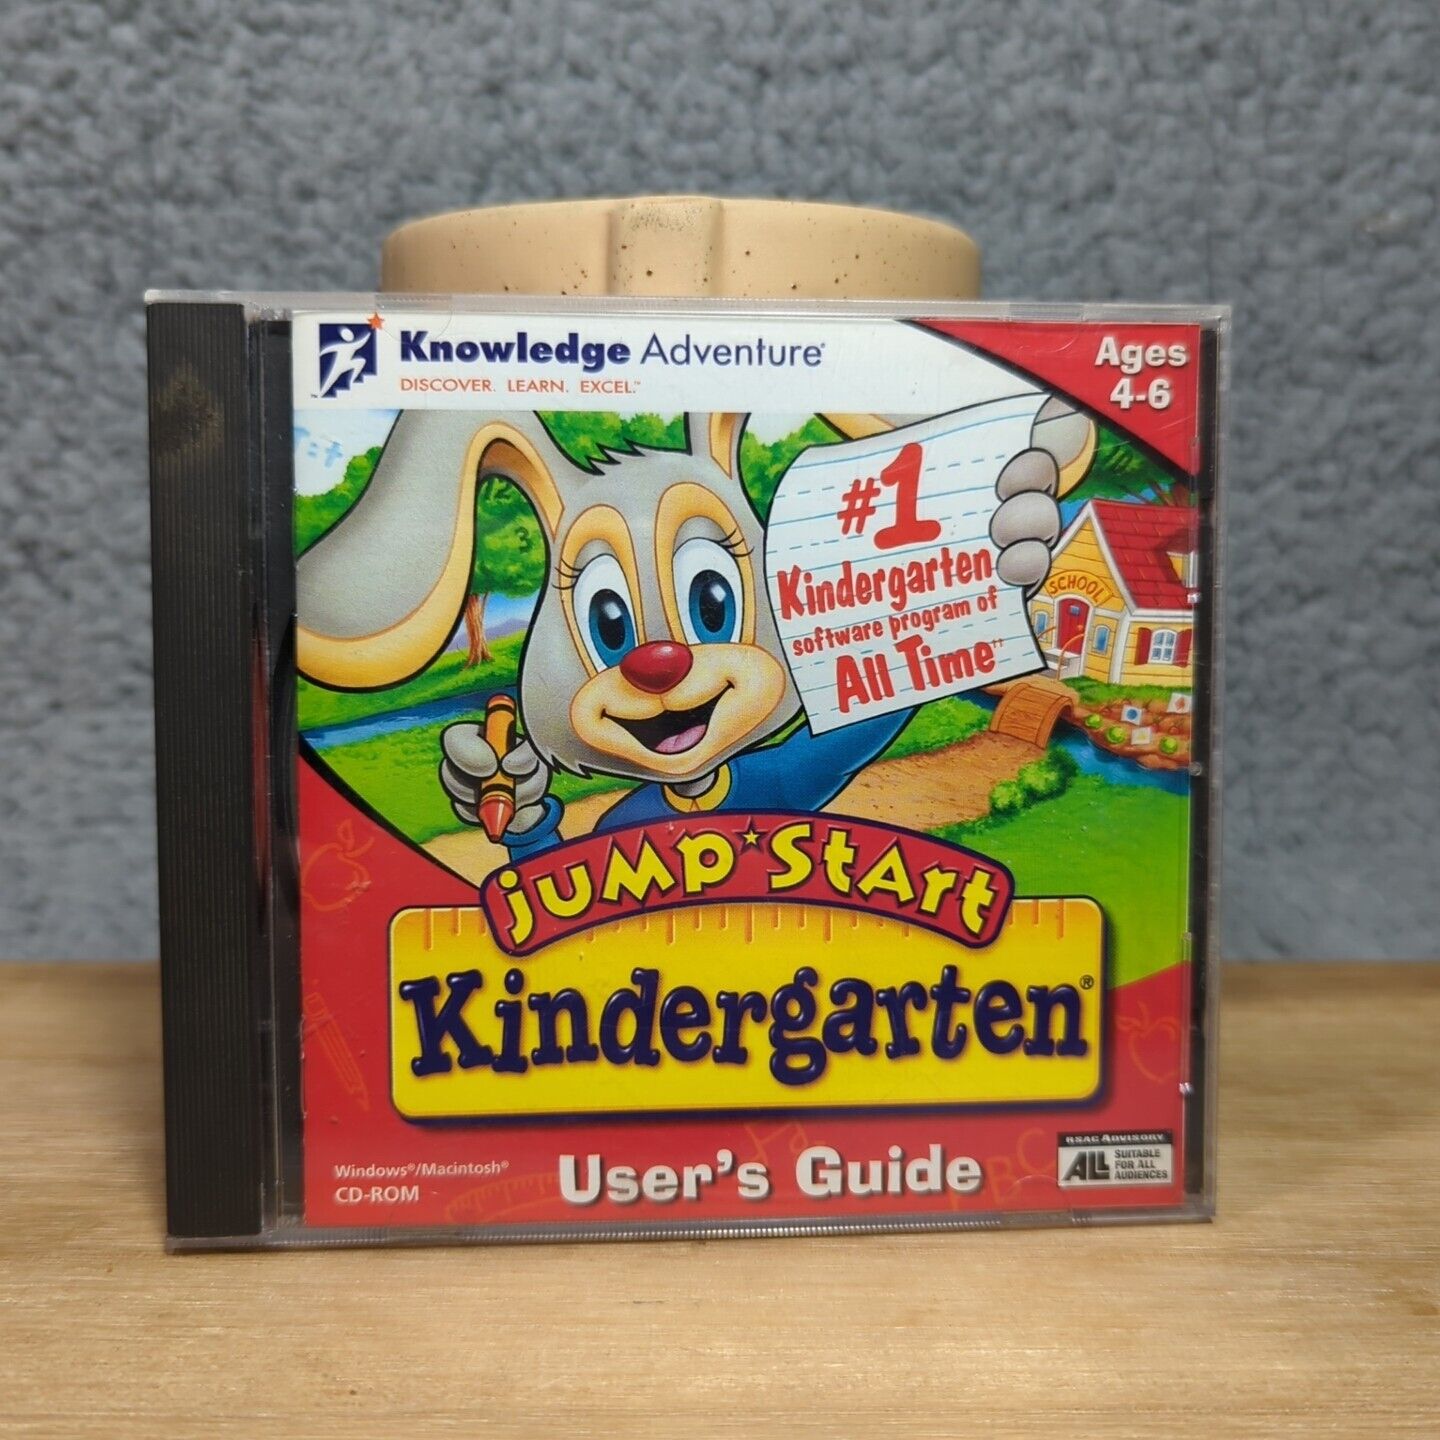 Knowledge Adventure JumpStart Kindergarten for PC, Mac